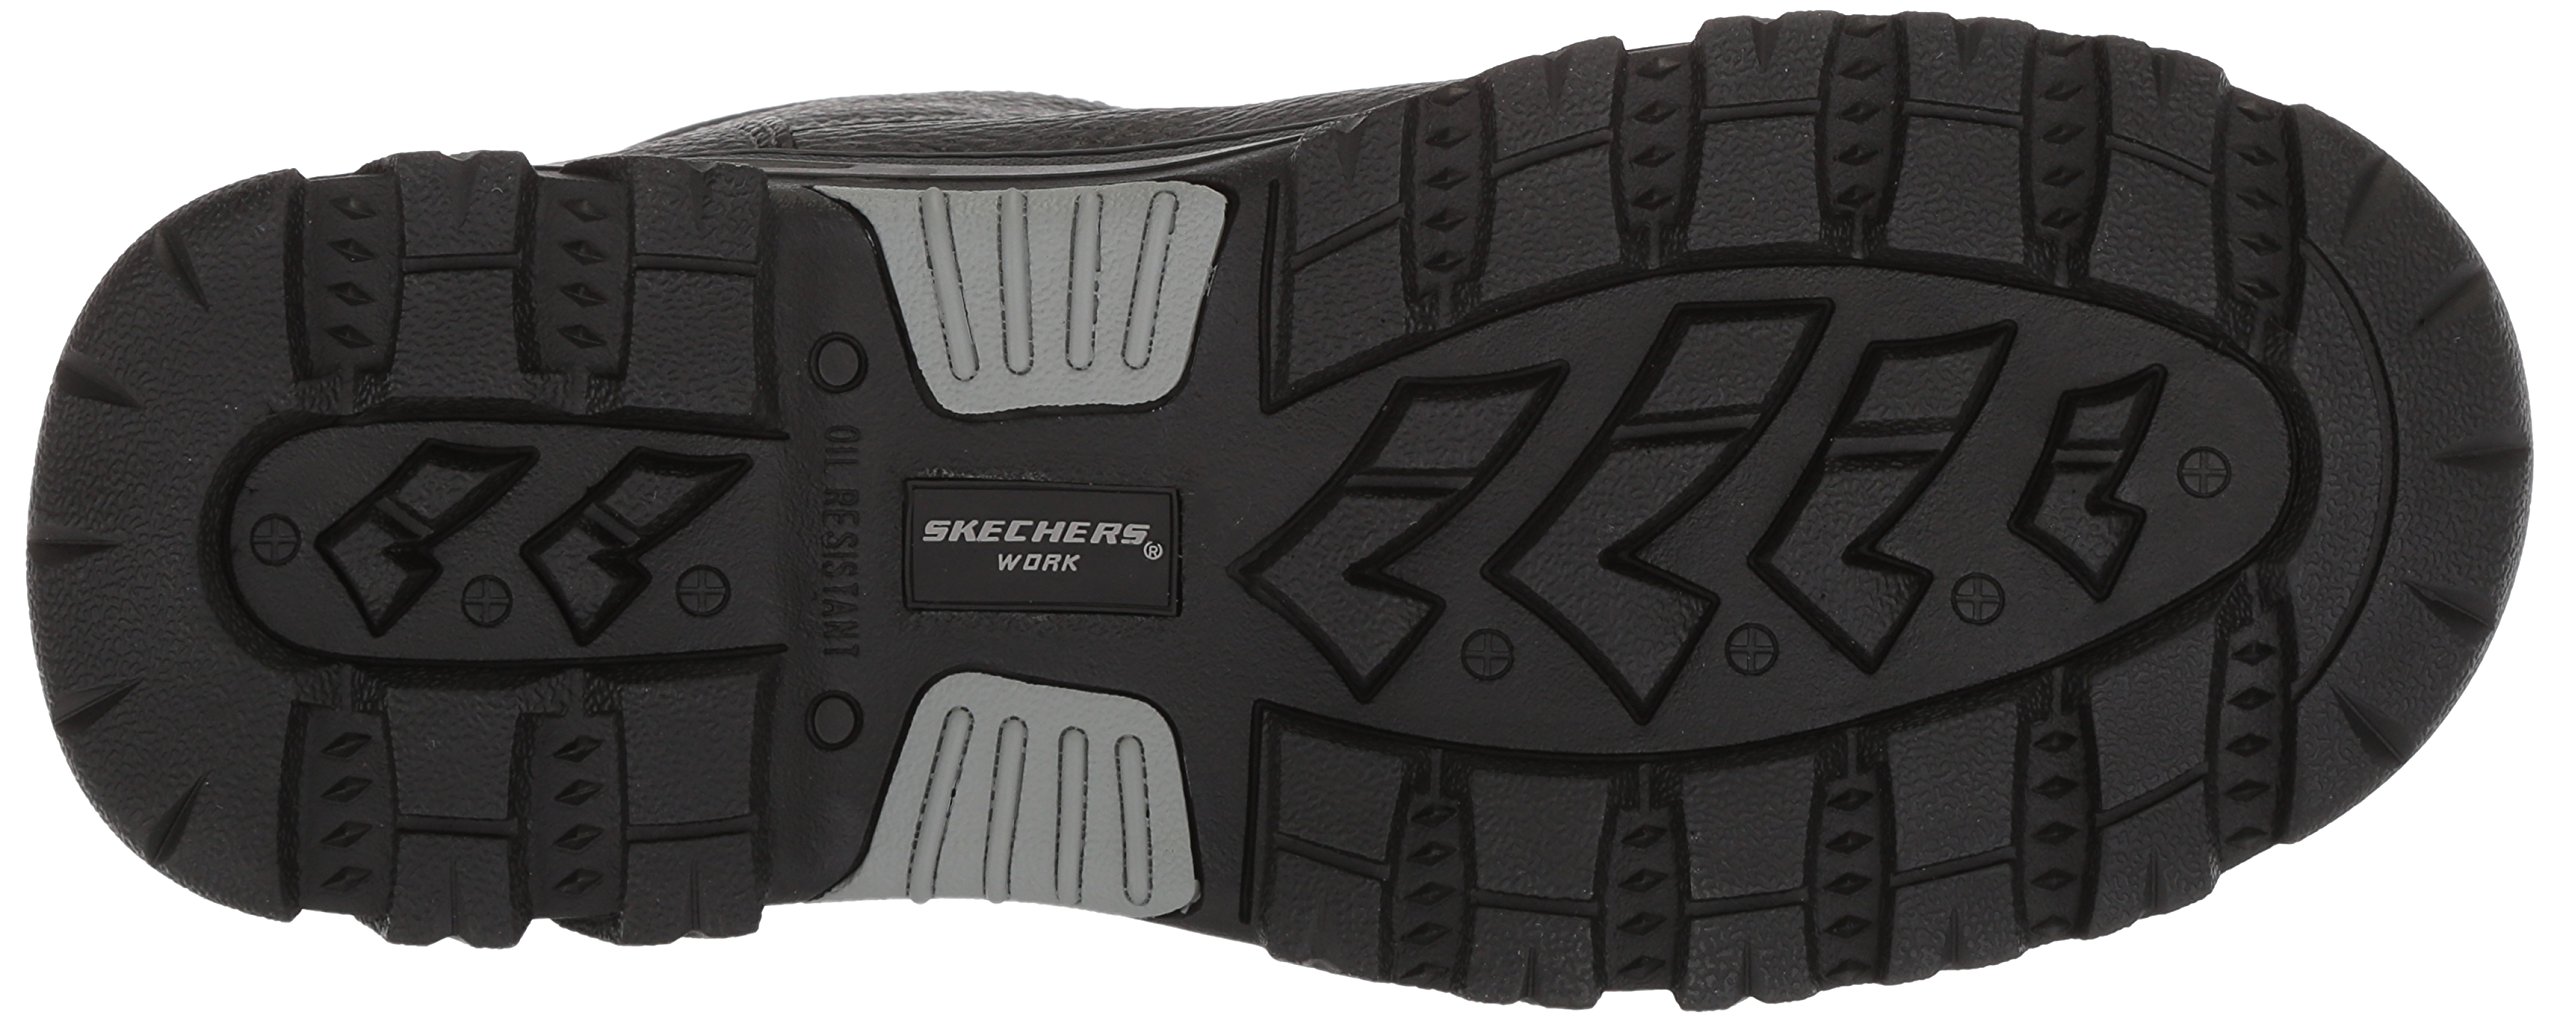 Skechers Men's Burgin-Tarlac Industrial Boot